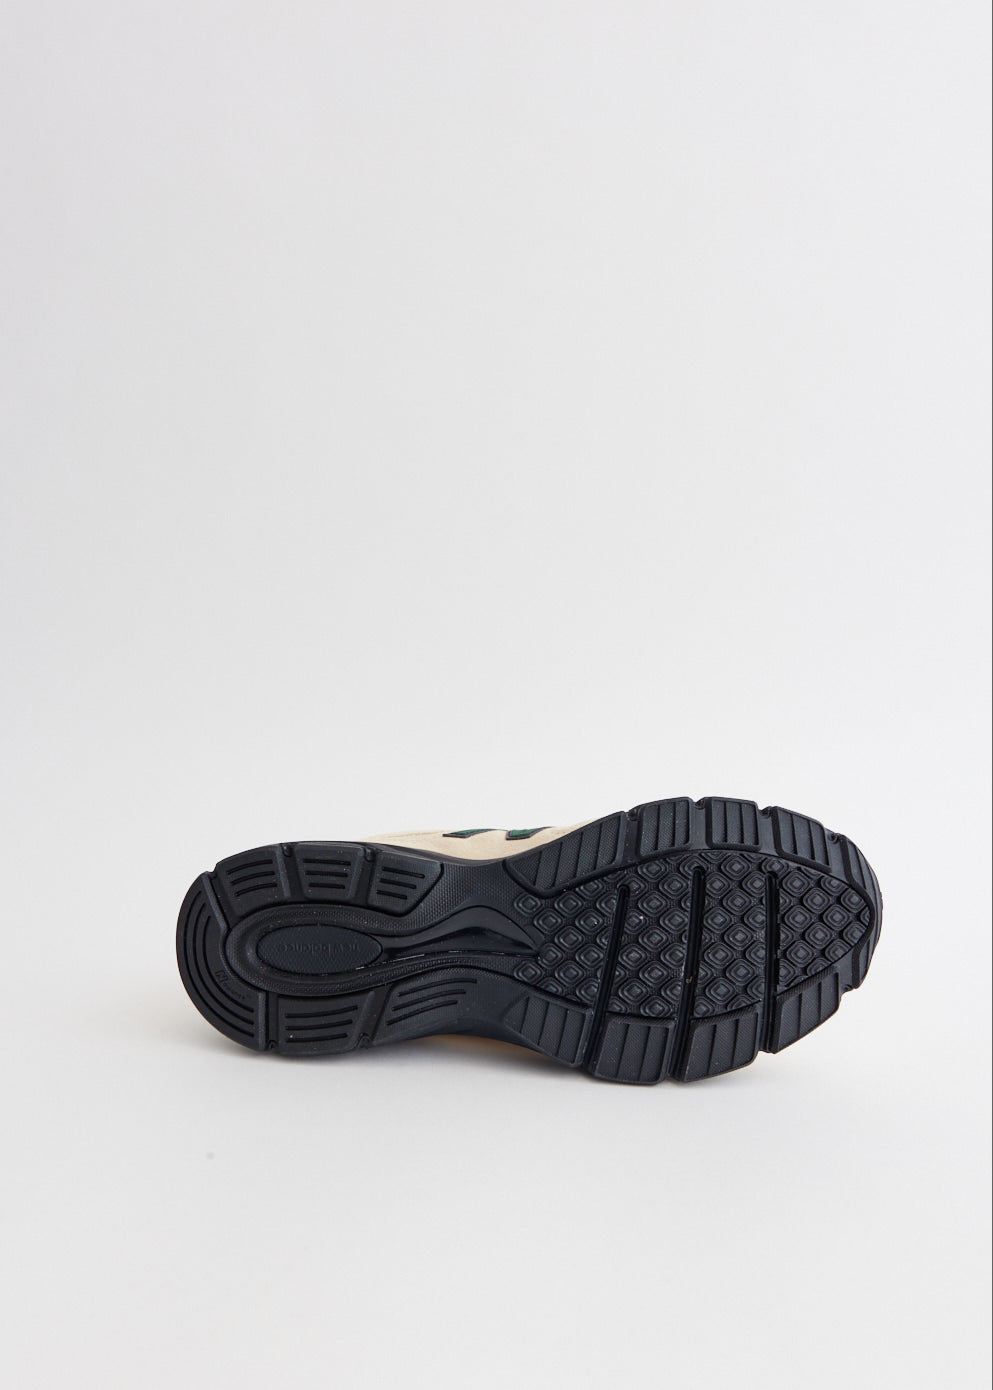 MADE in USA 990v4 'Macadamia Nut Black' Sneakers